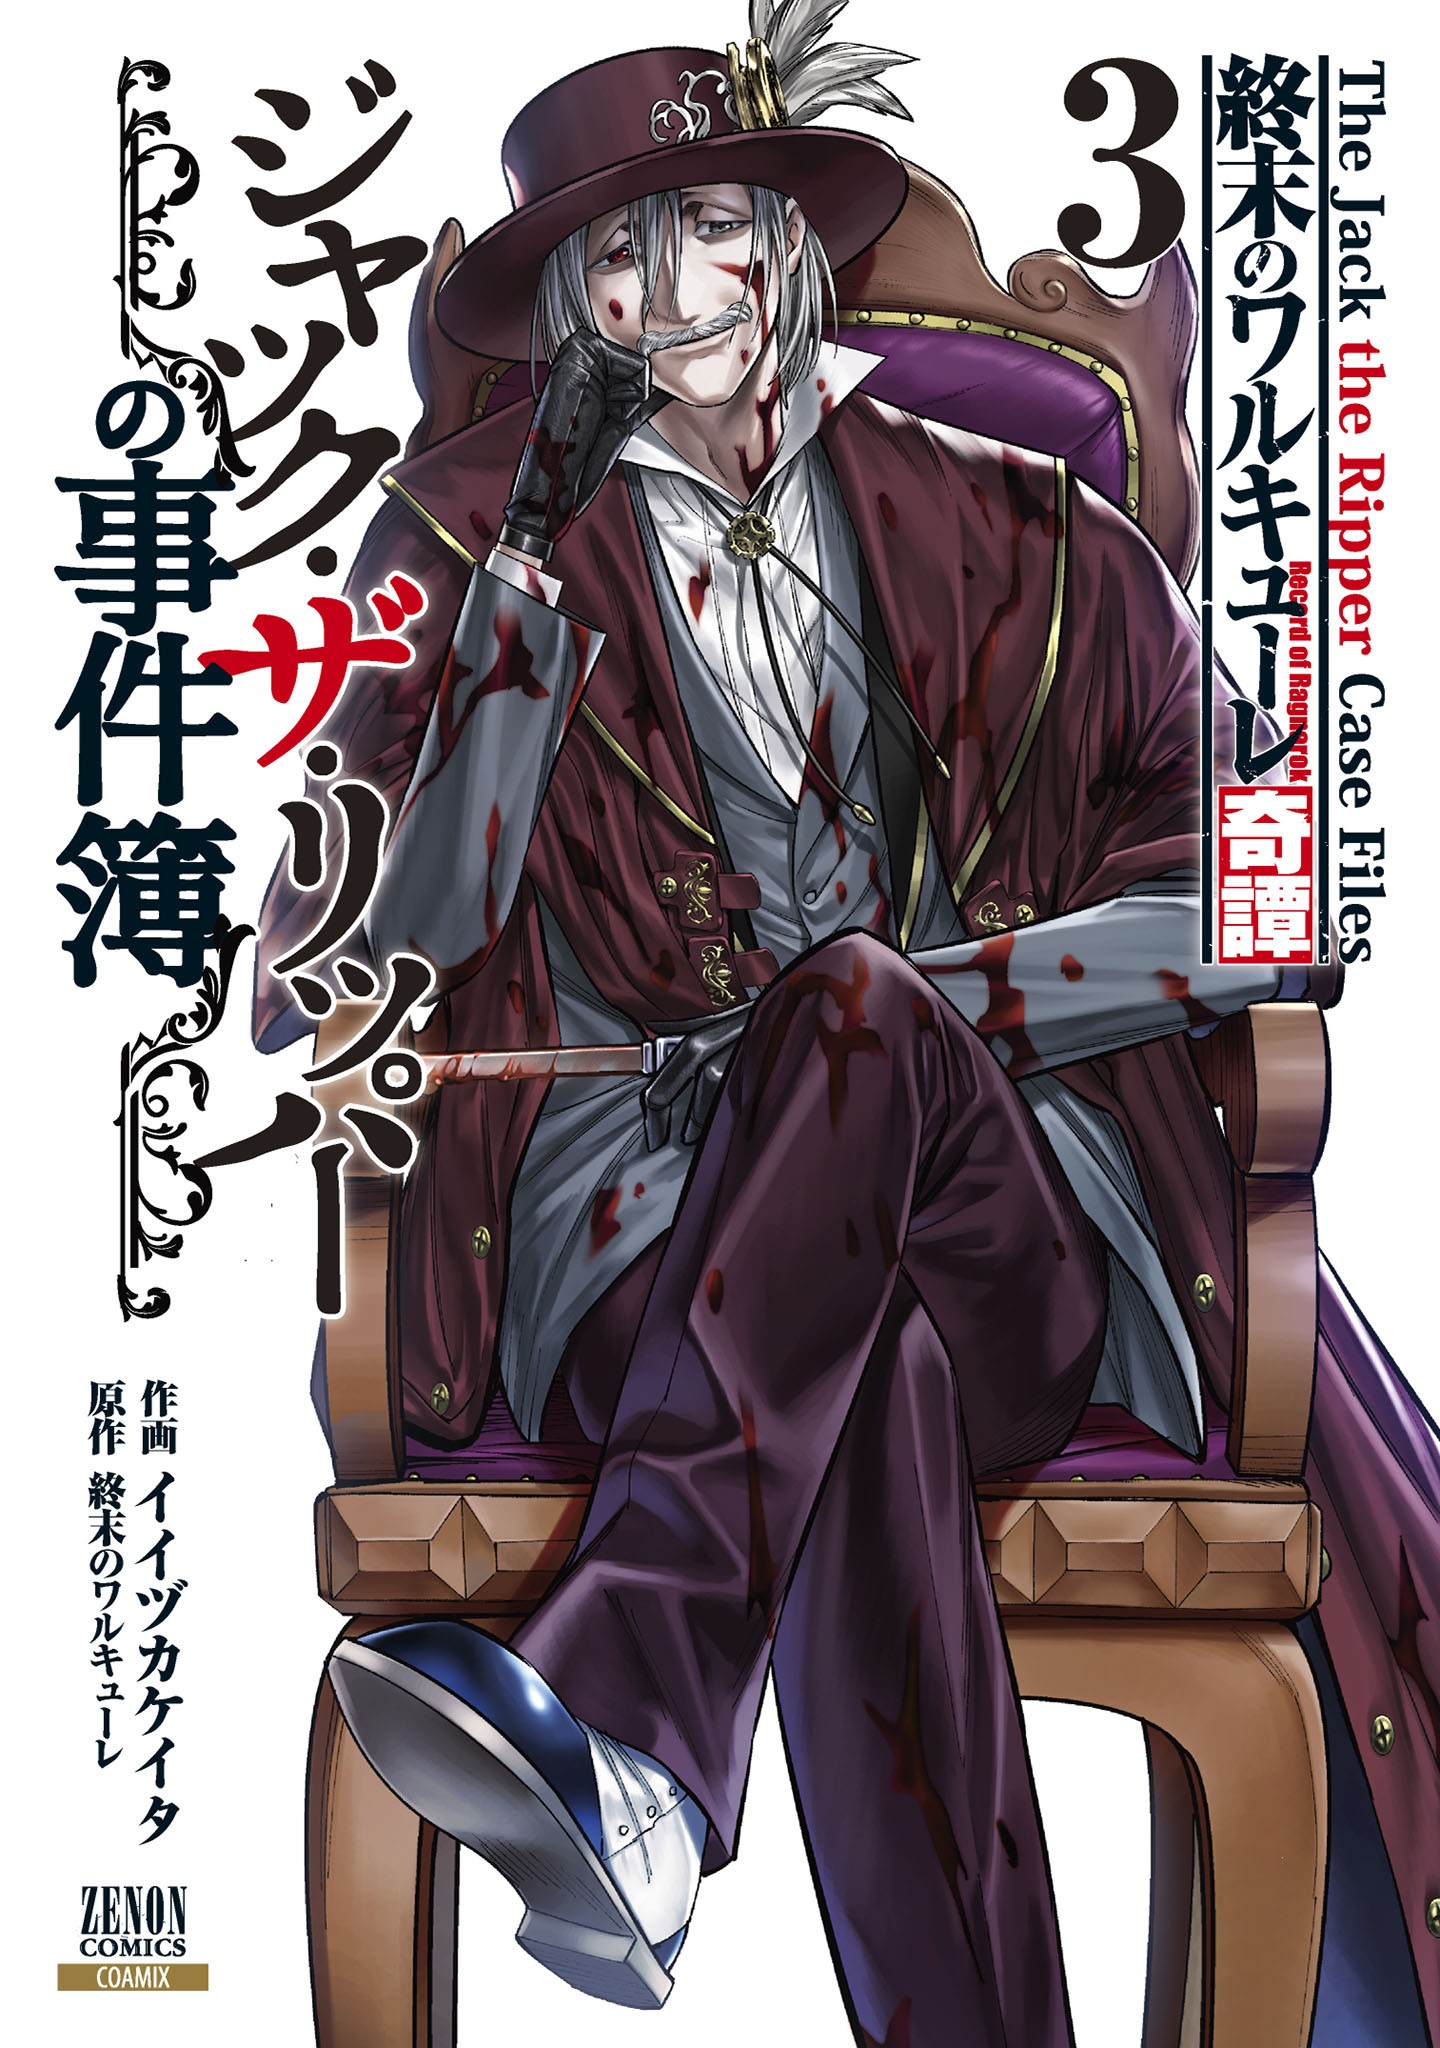 Read Shuumatsu No Valkyrie Kitan – Jack The Ripper No Jikenbo 17 - Oni Scan